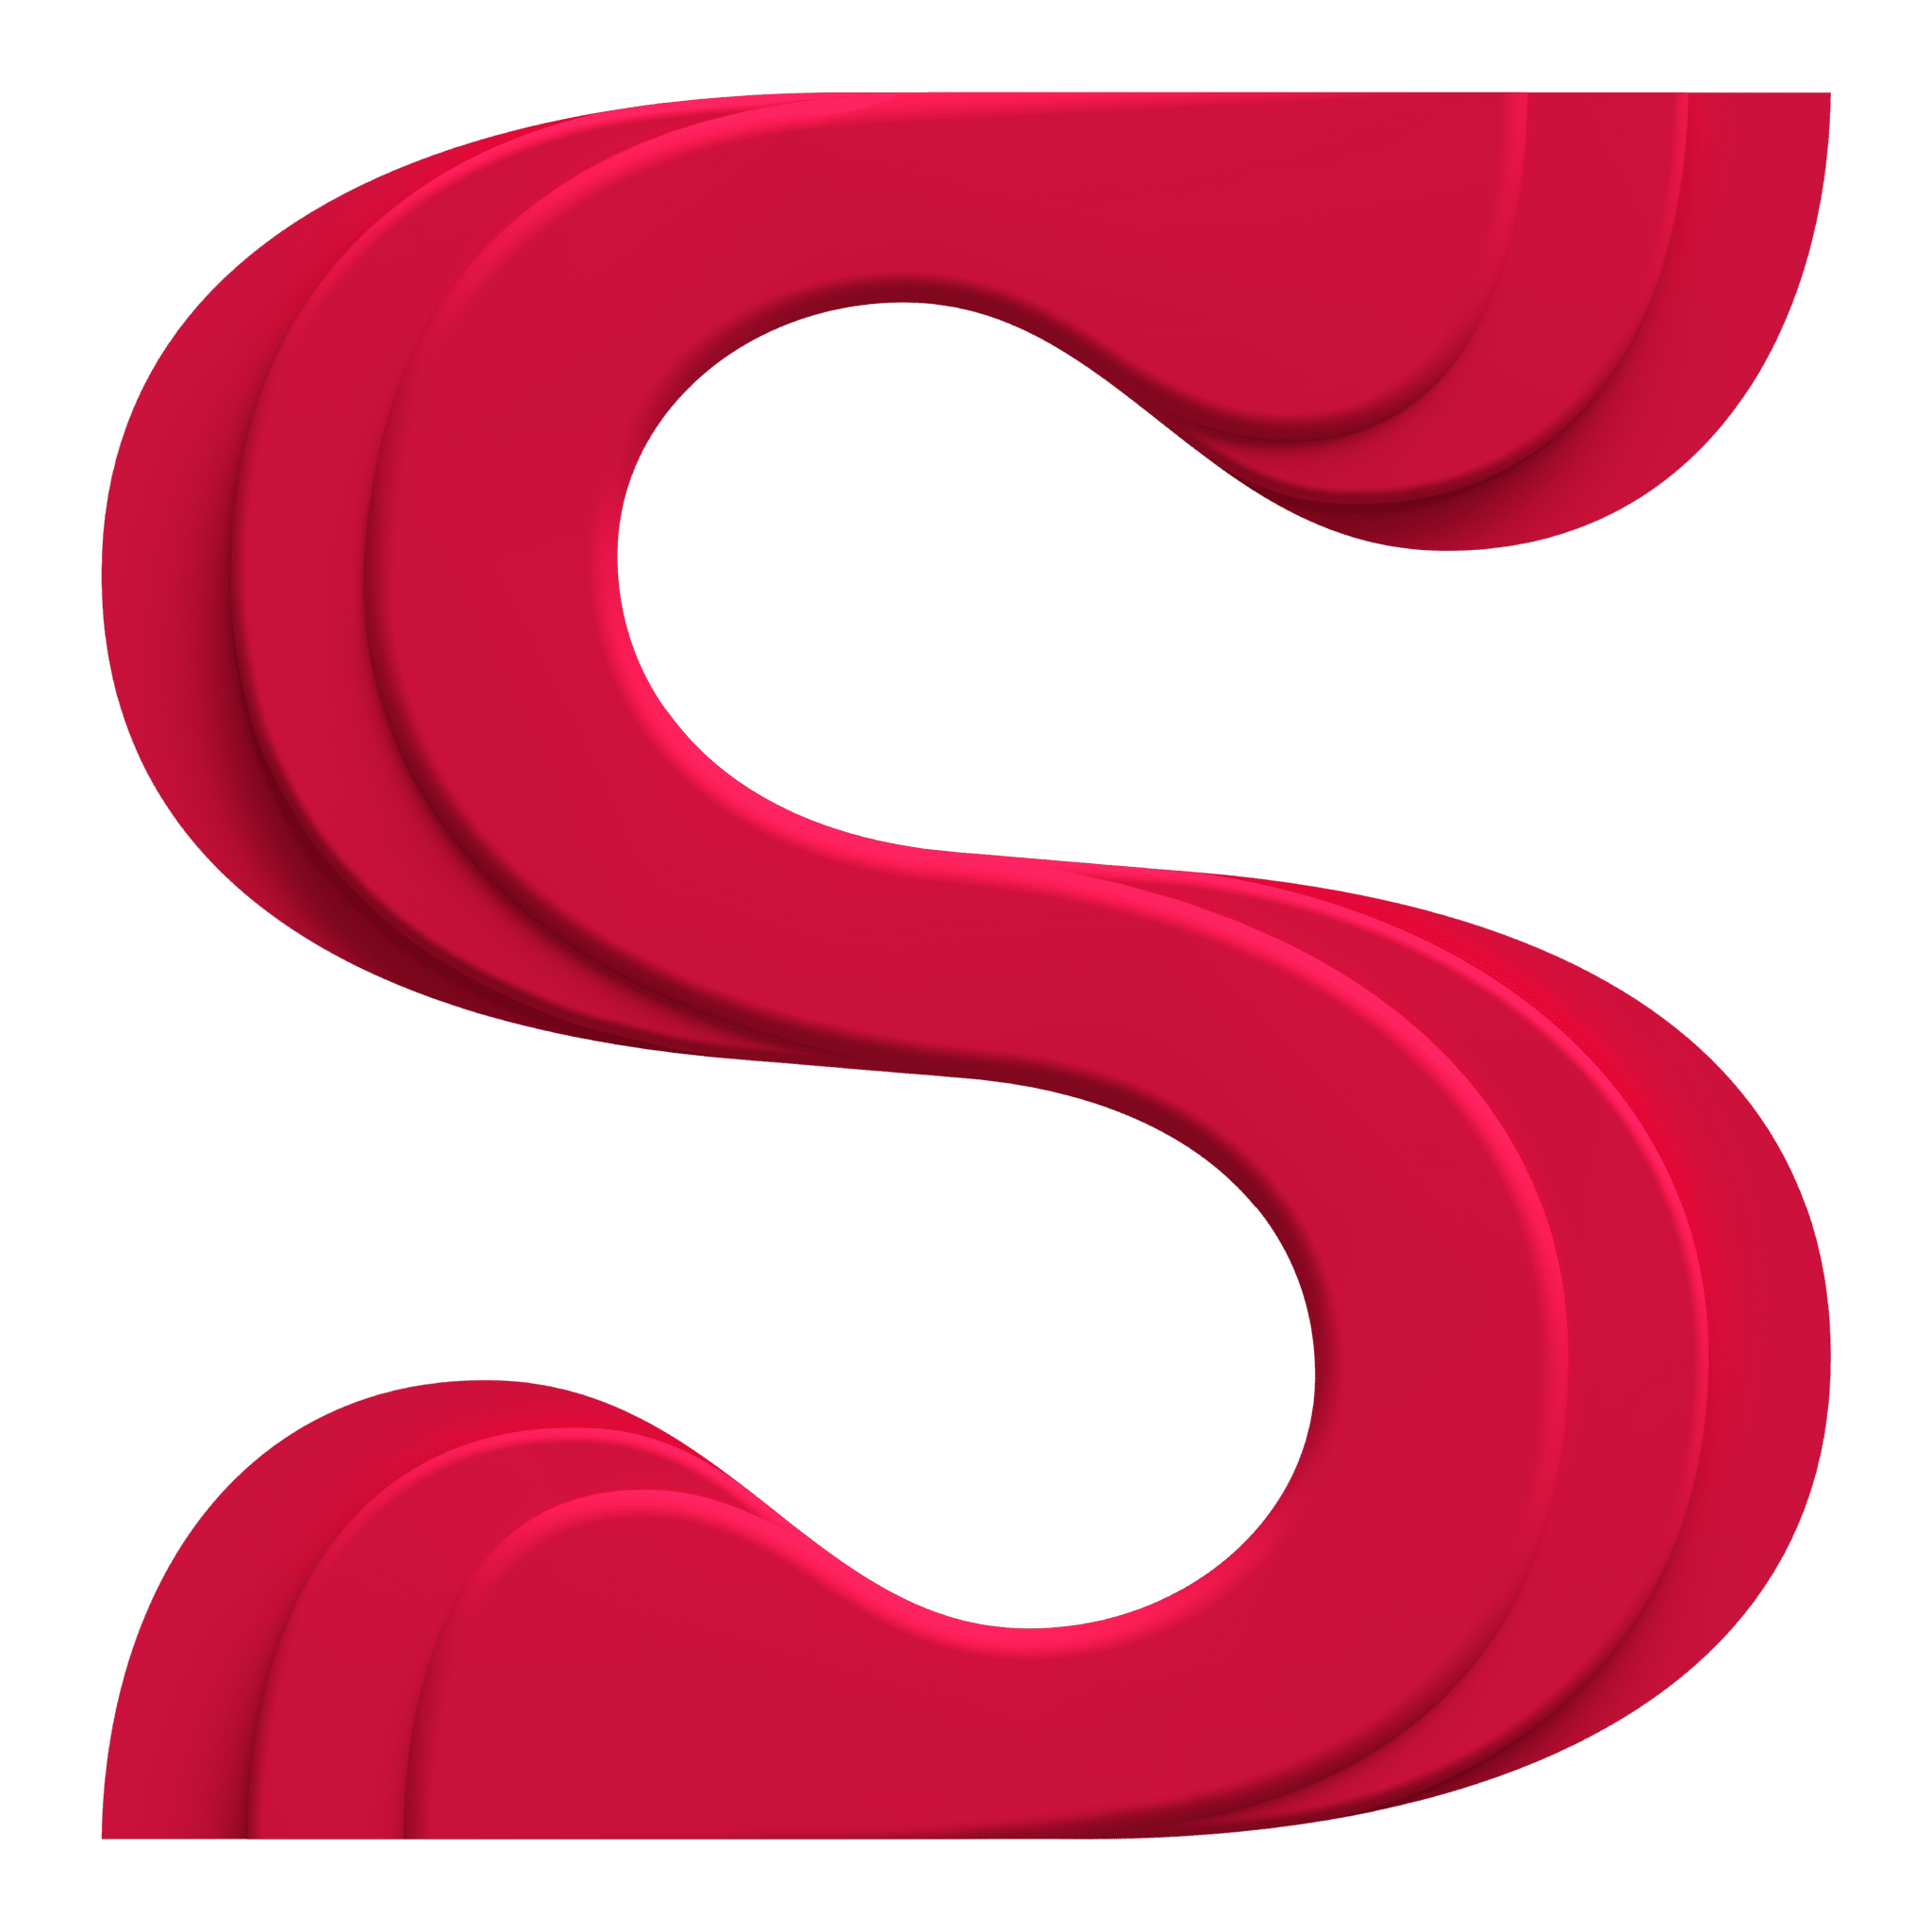 Red, layered upper half of the new Splendid Spoon 'S' logo